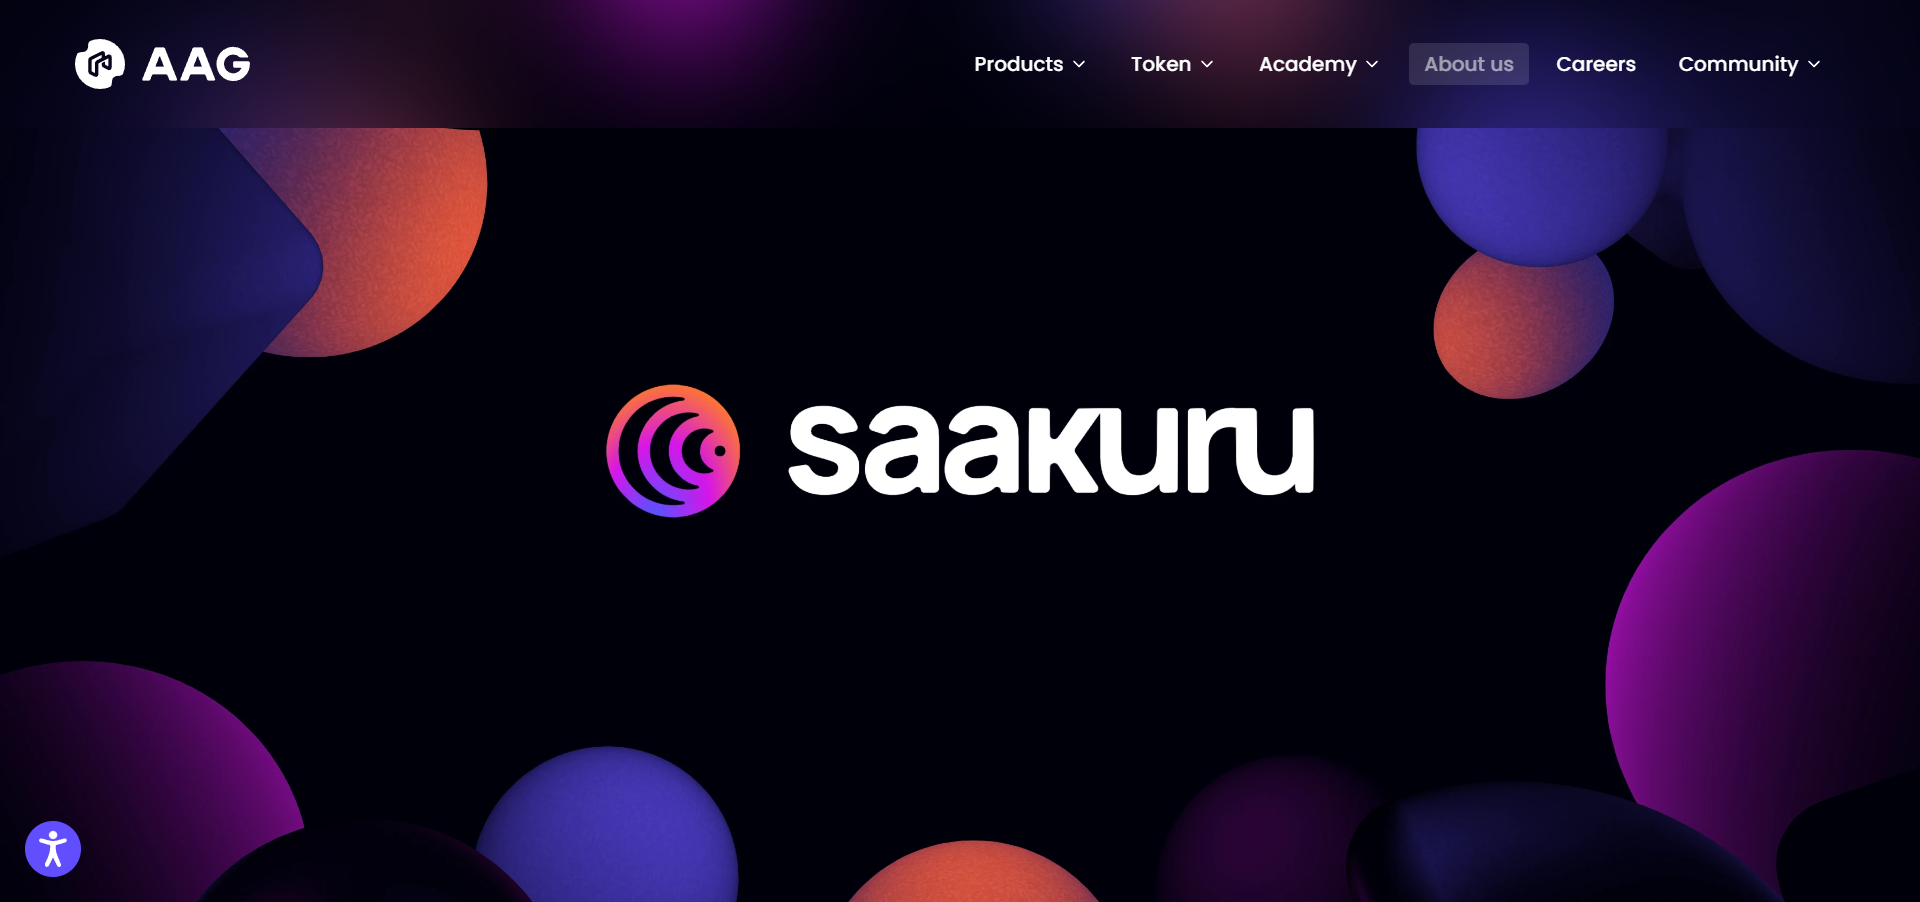 AAG launches Saakuru solution